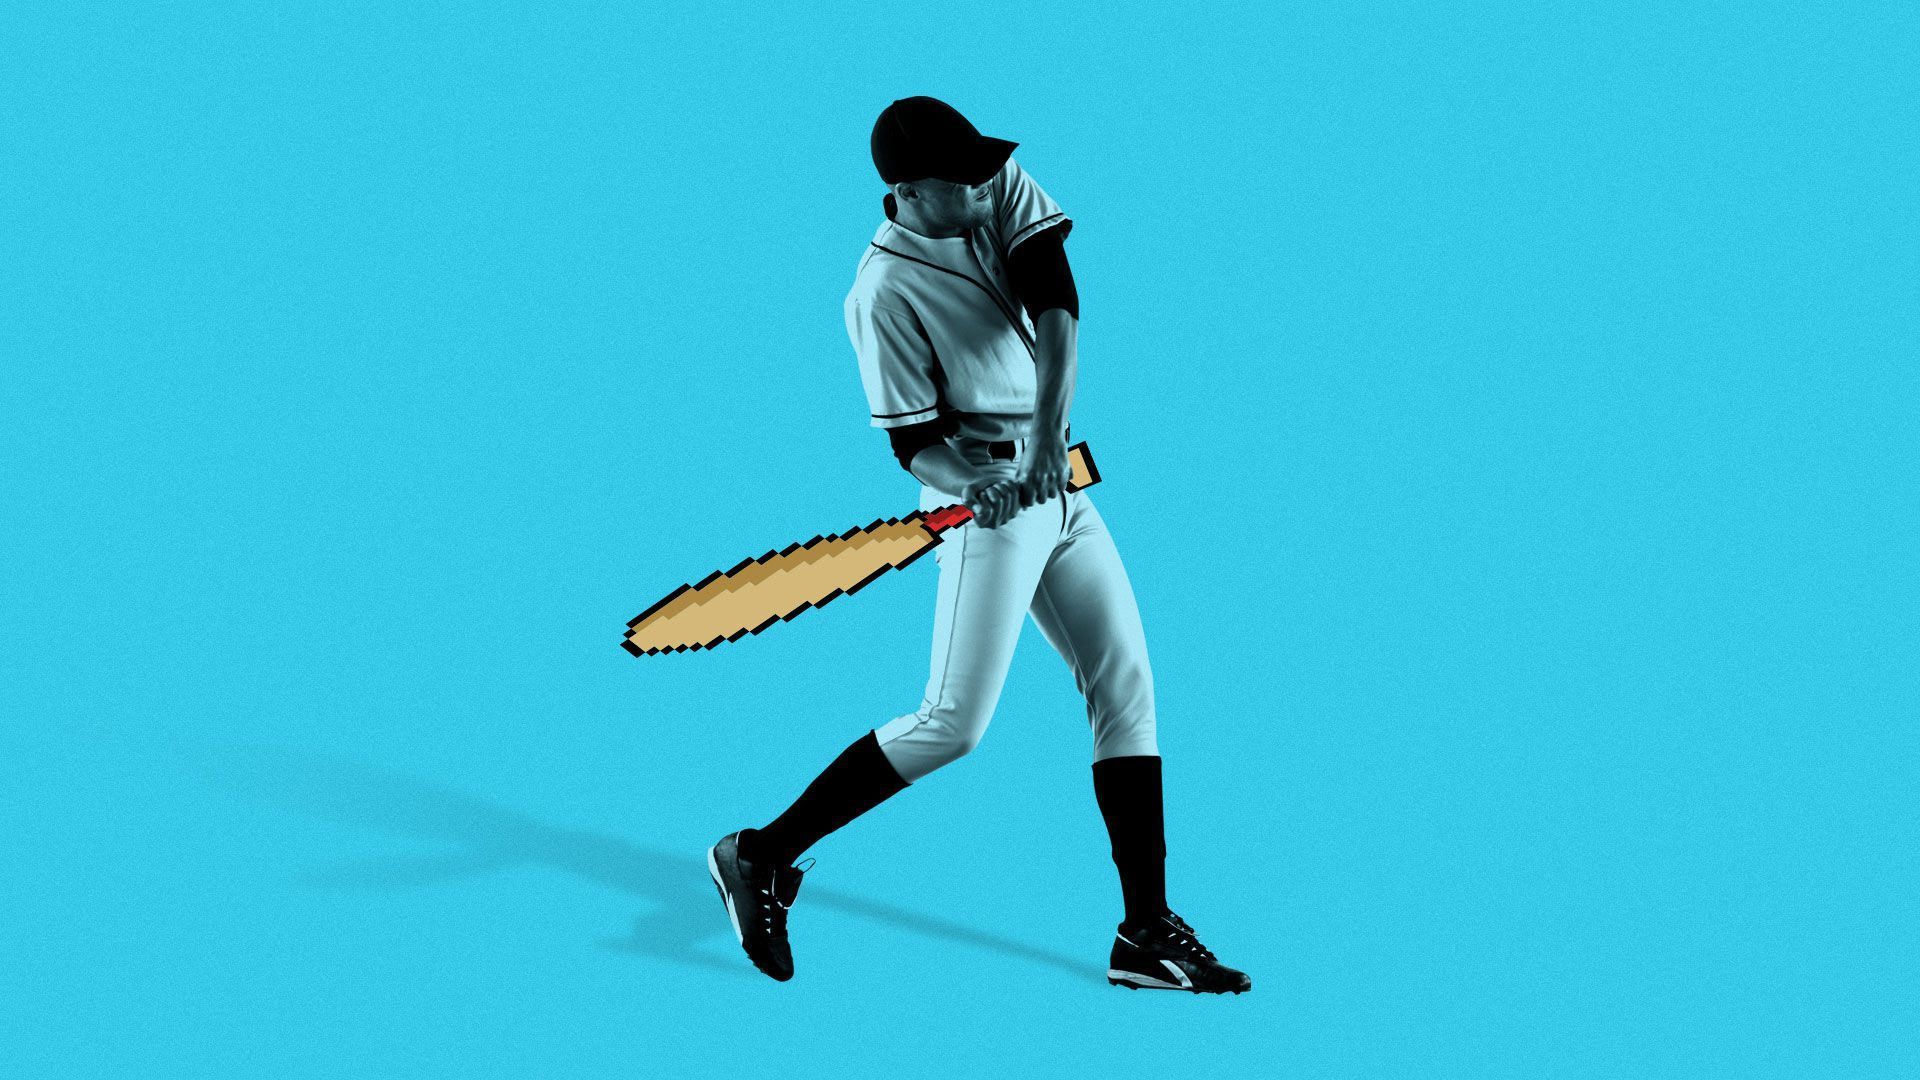 An illustration of a baseball player.